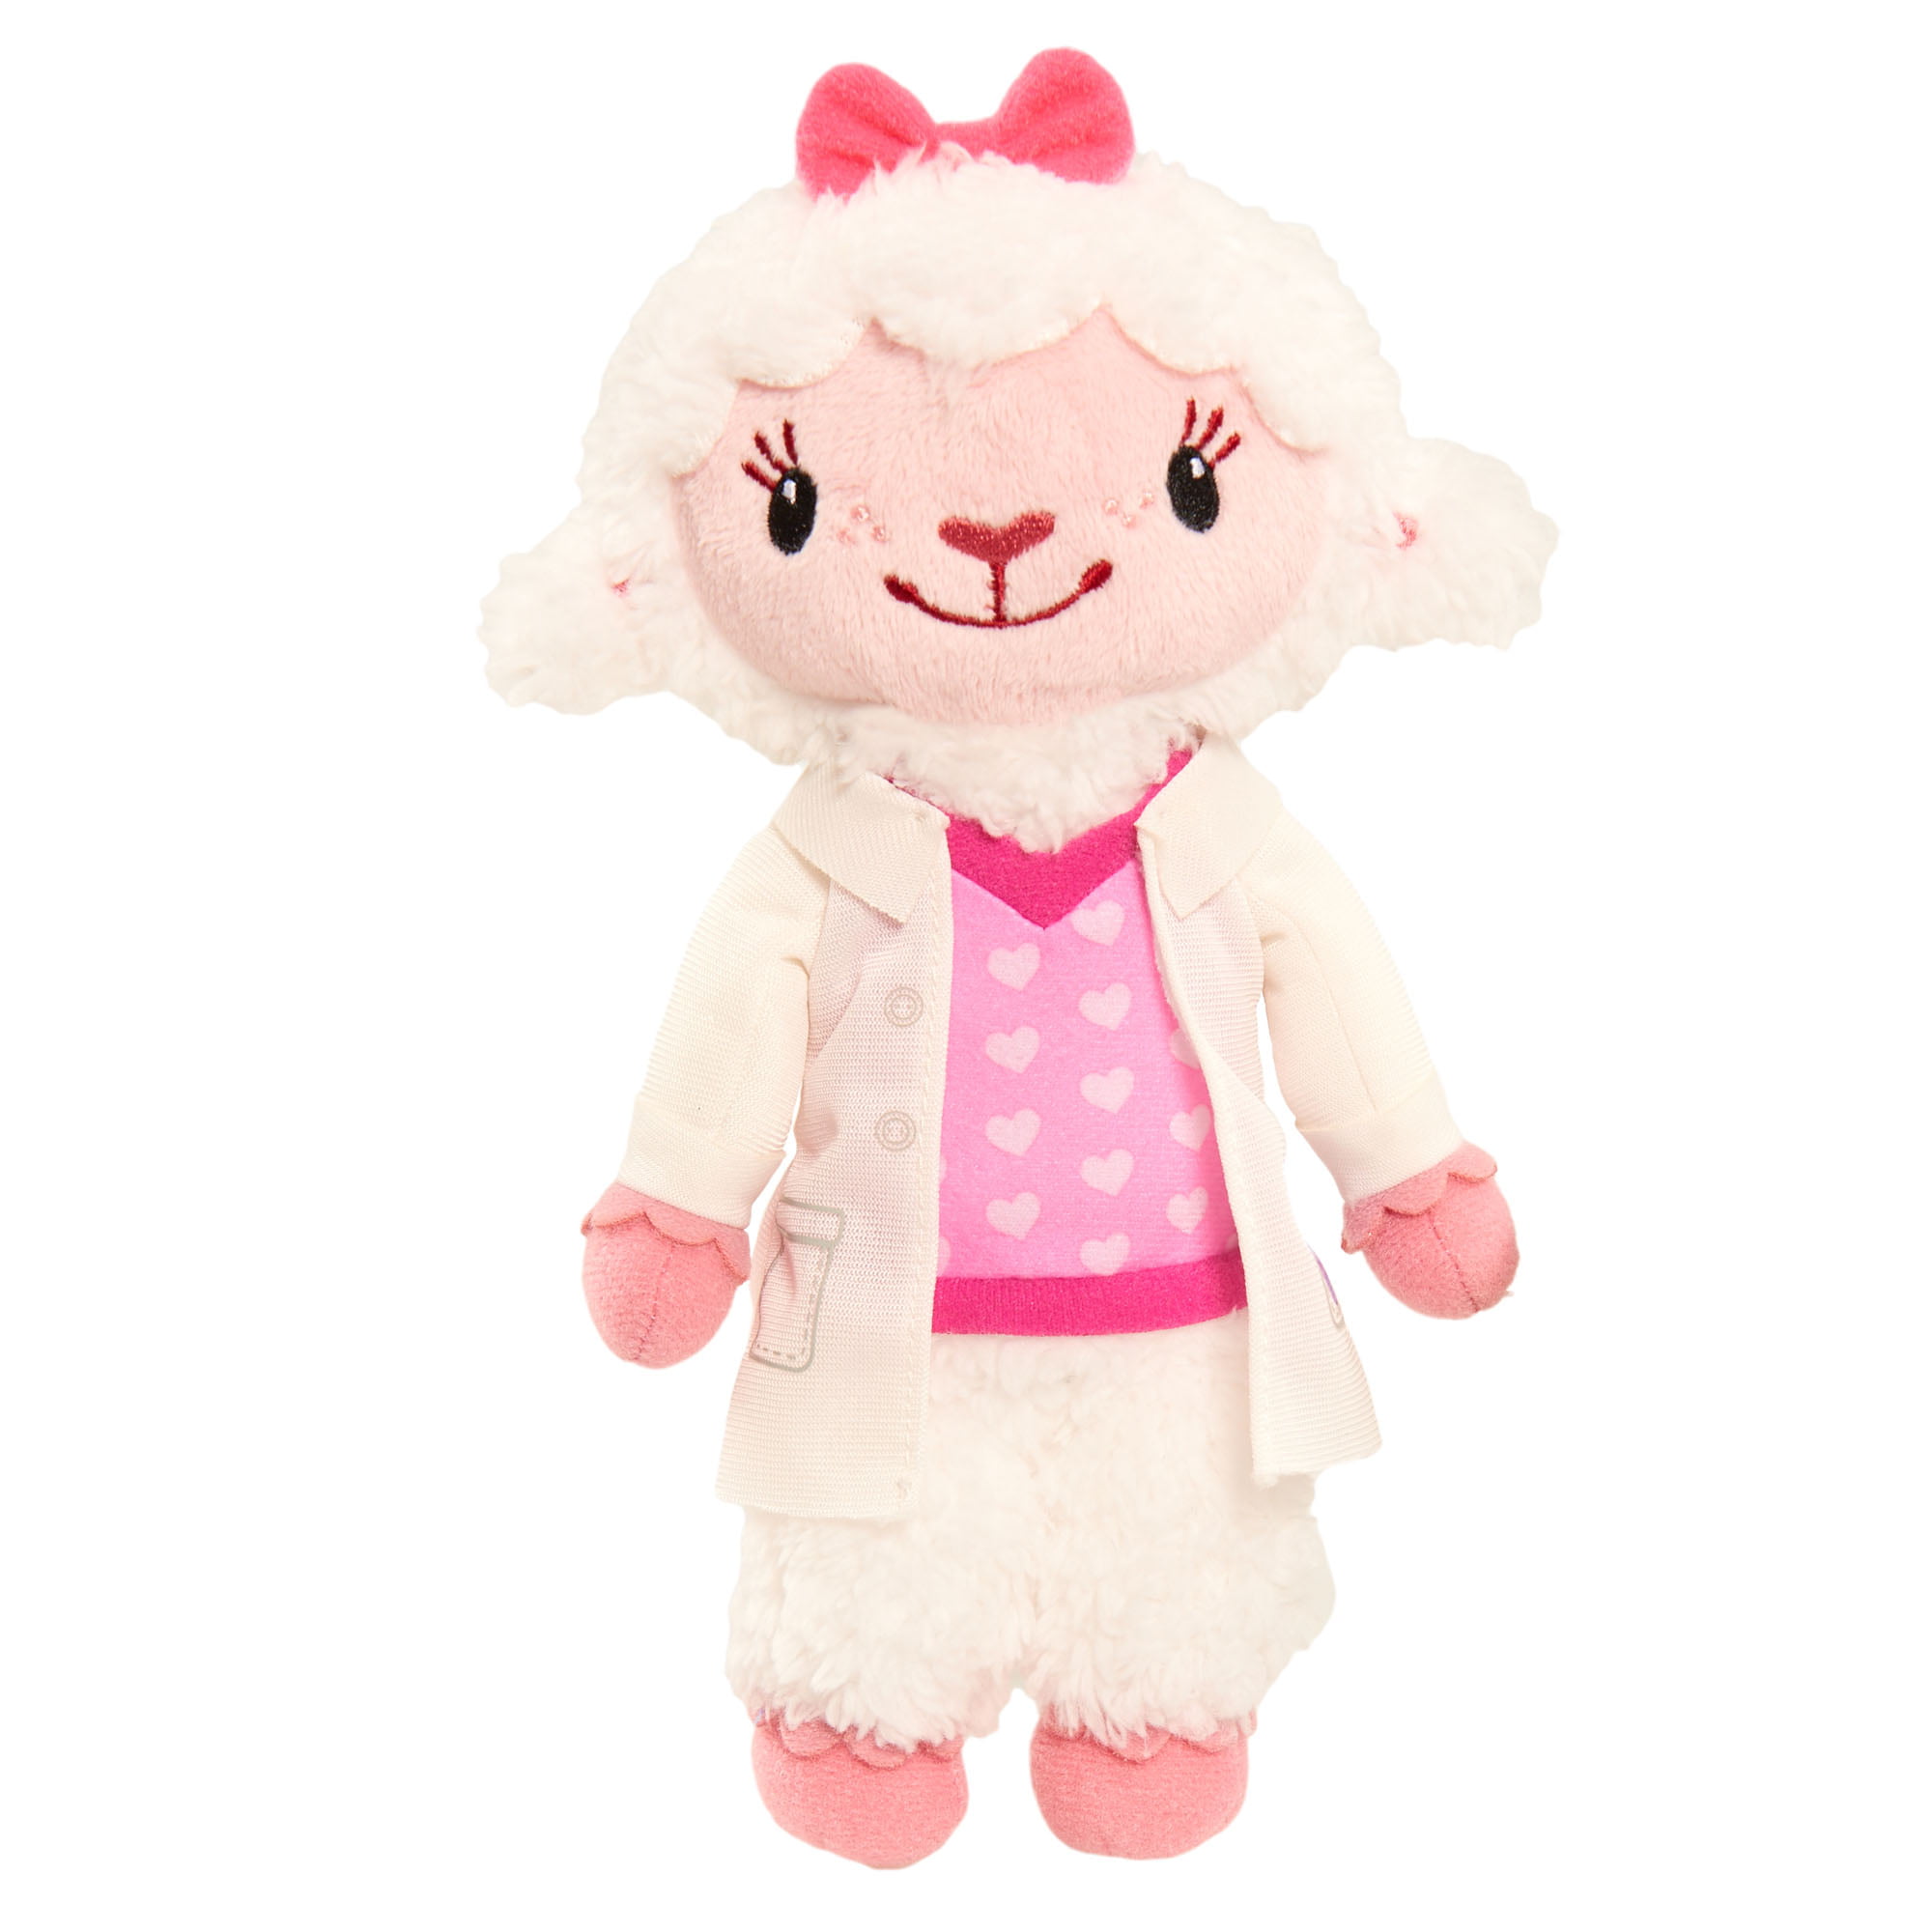 BNWT! Disney Juniors Doc McStuffins Lambie lamb plush purse with zip 